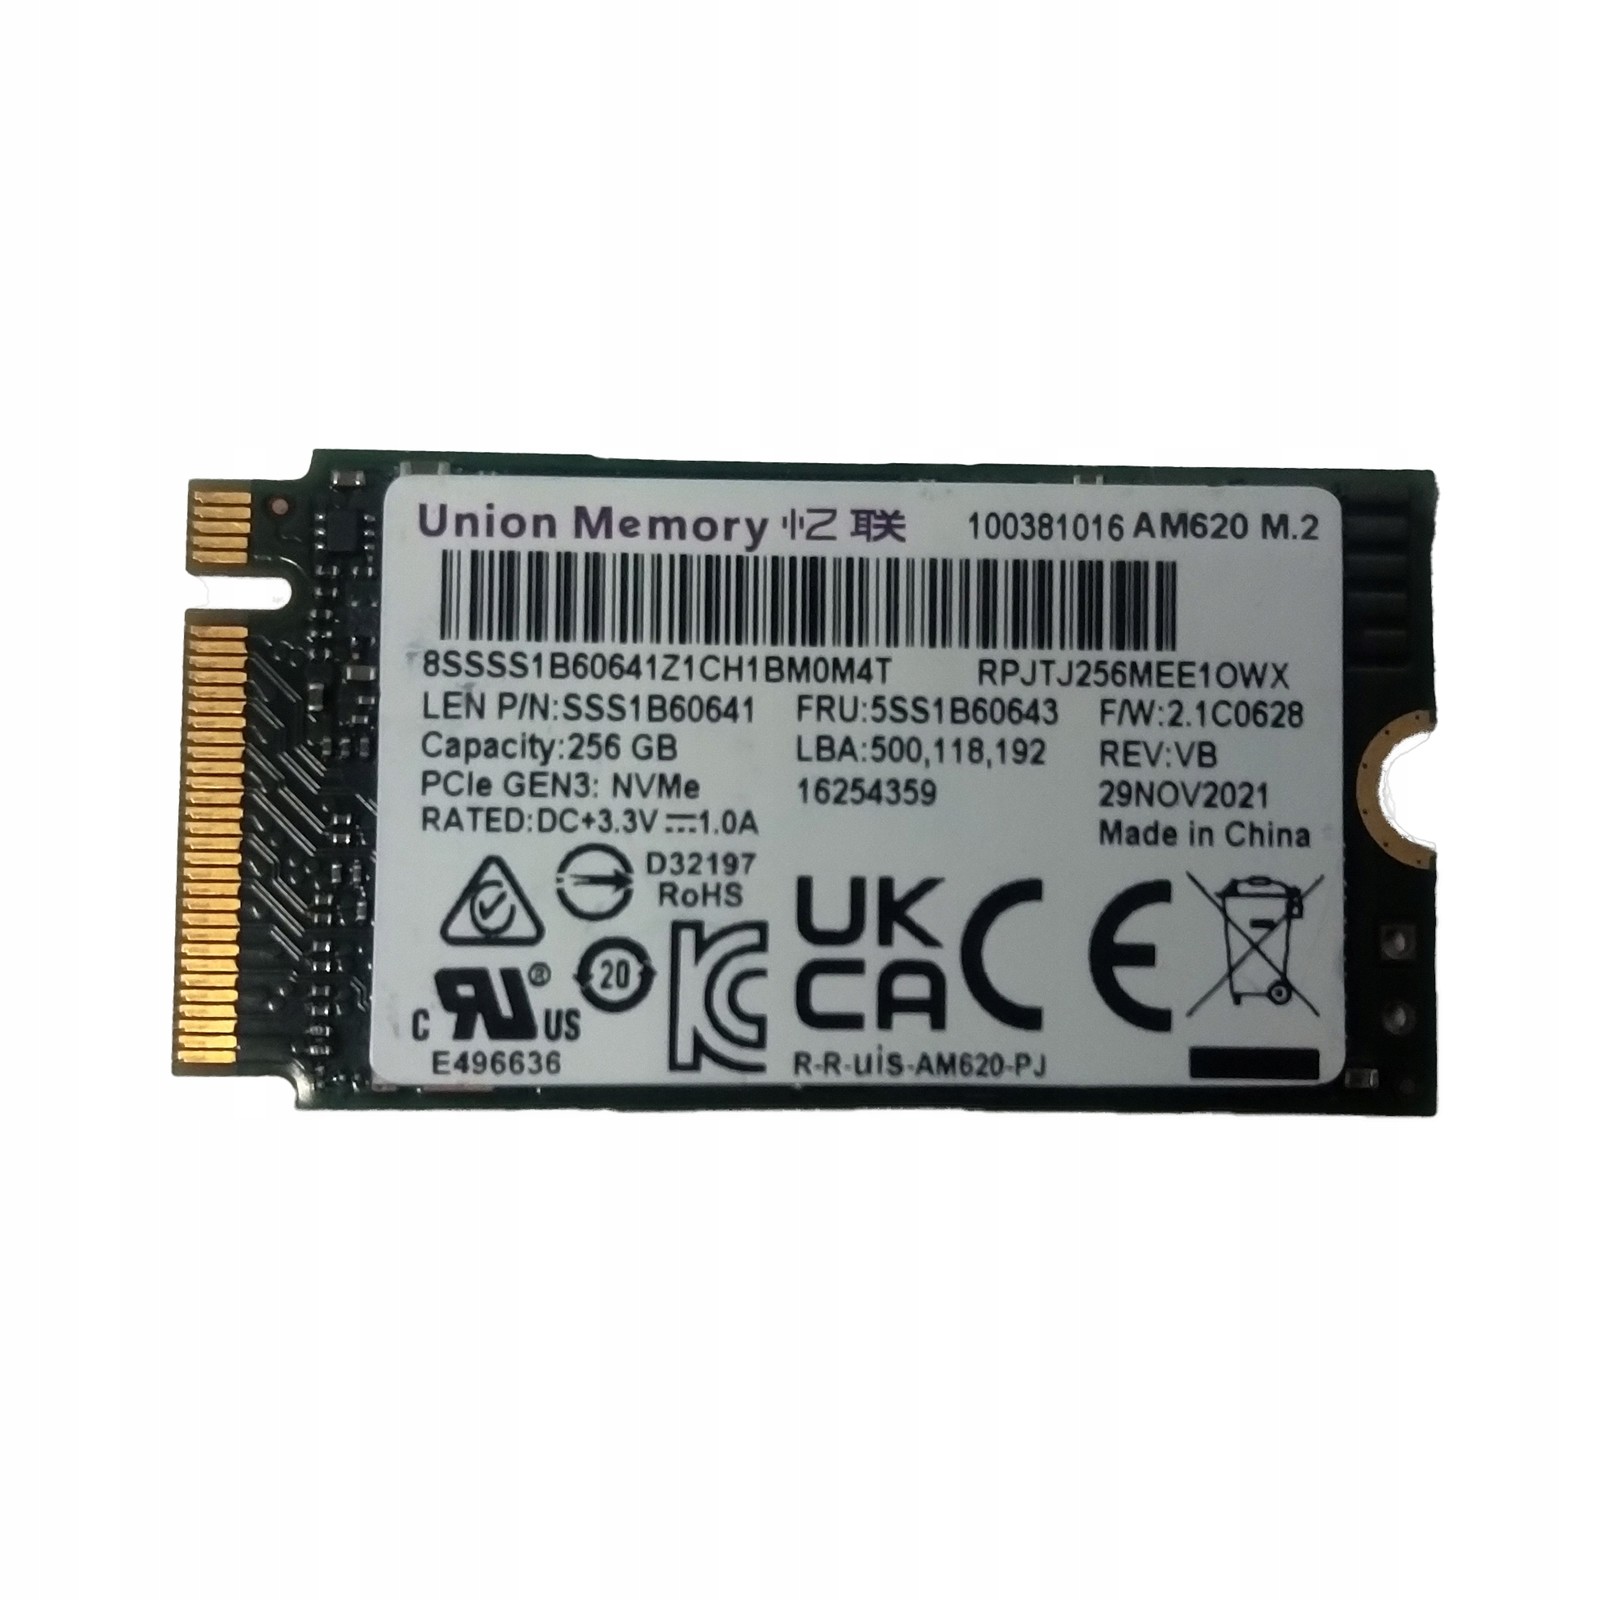 Union Memory Ssd disk 256GB Ssd M.2 NVme PCie 2242